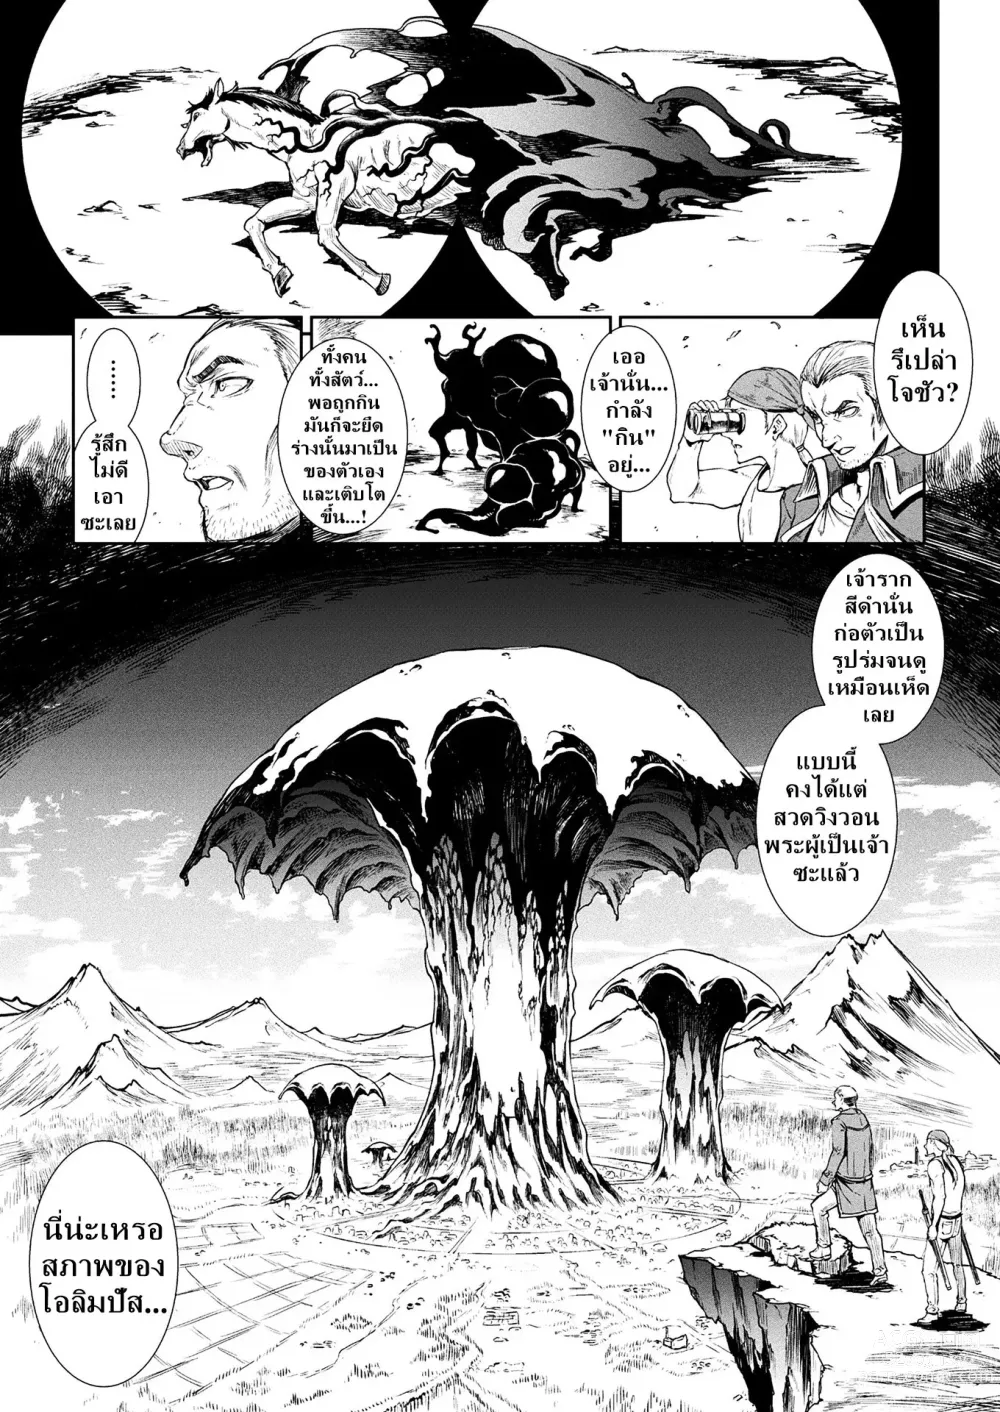 Page 7 of manga Raikou Shinki Igis Magia III -PANDRA saga 3rd ignition-